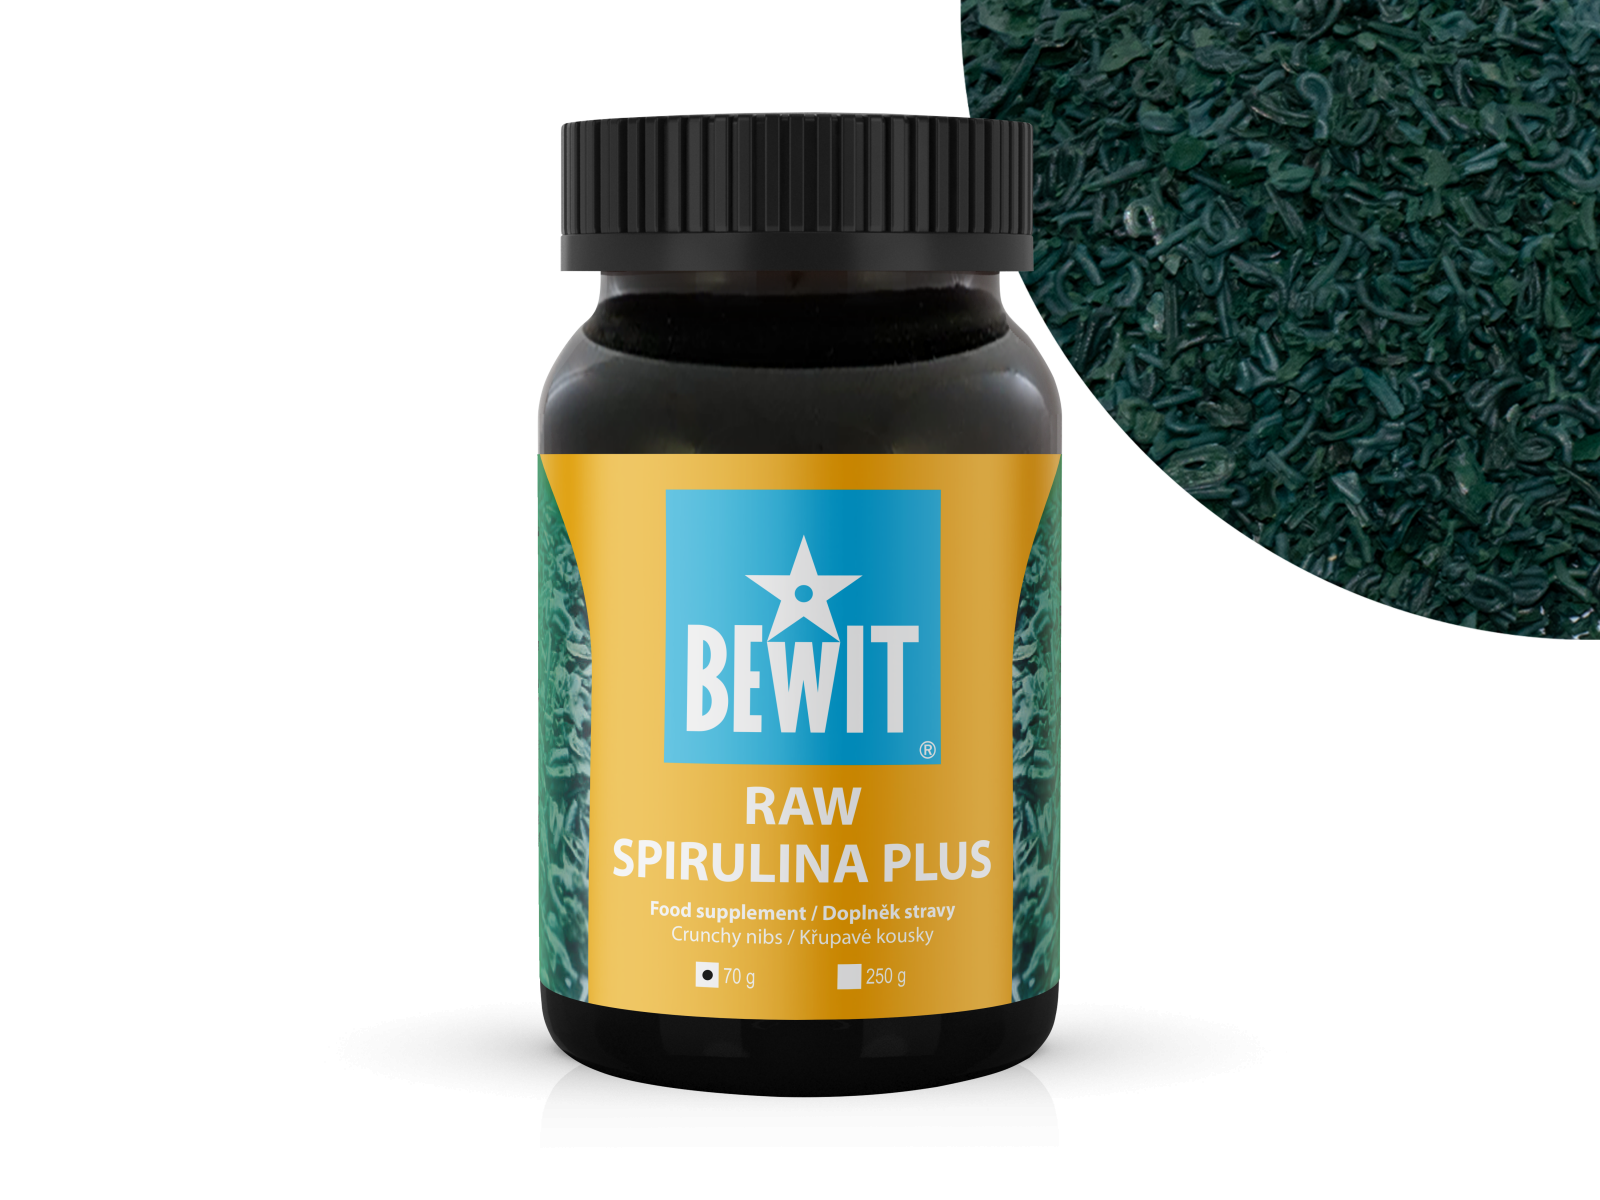 BEWIT Spirulina Plus RAW, pieces - Food supplement